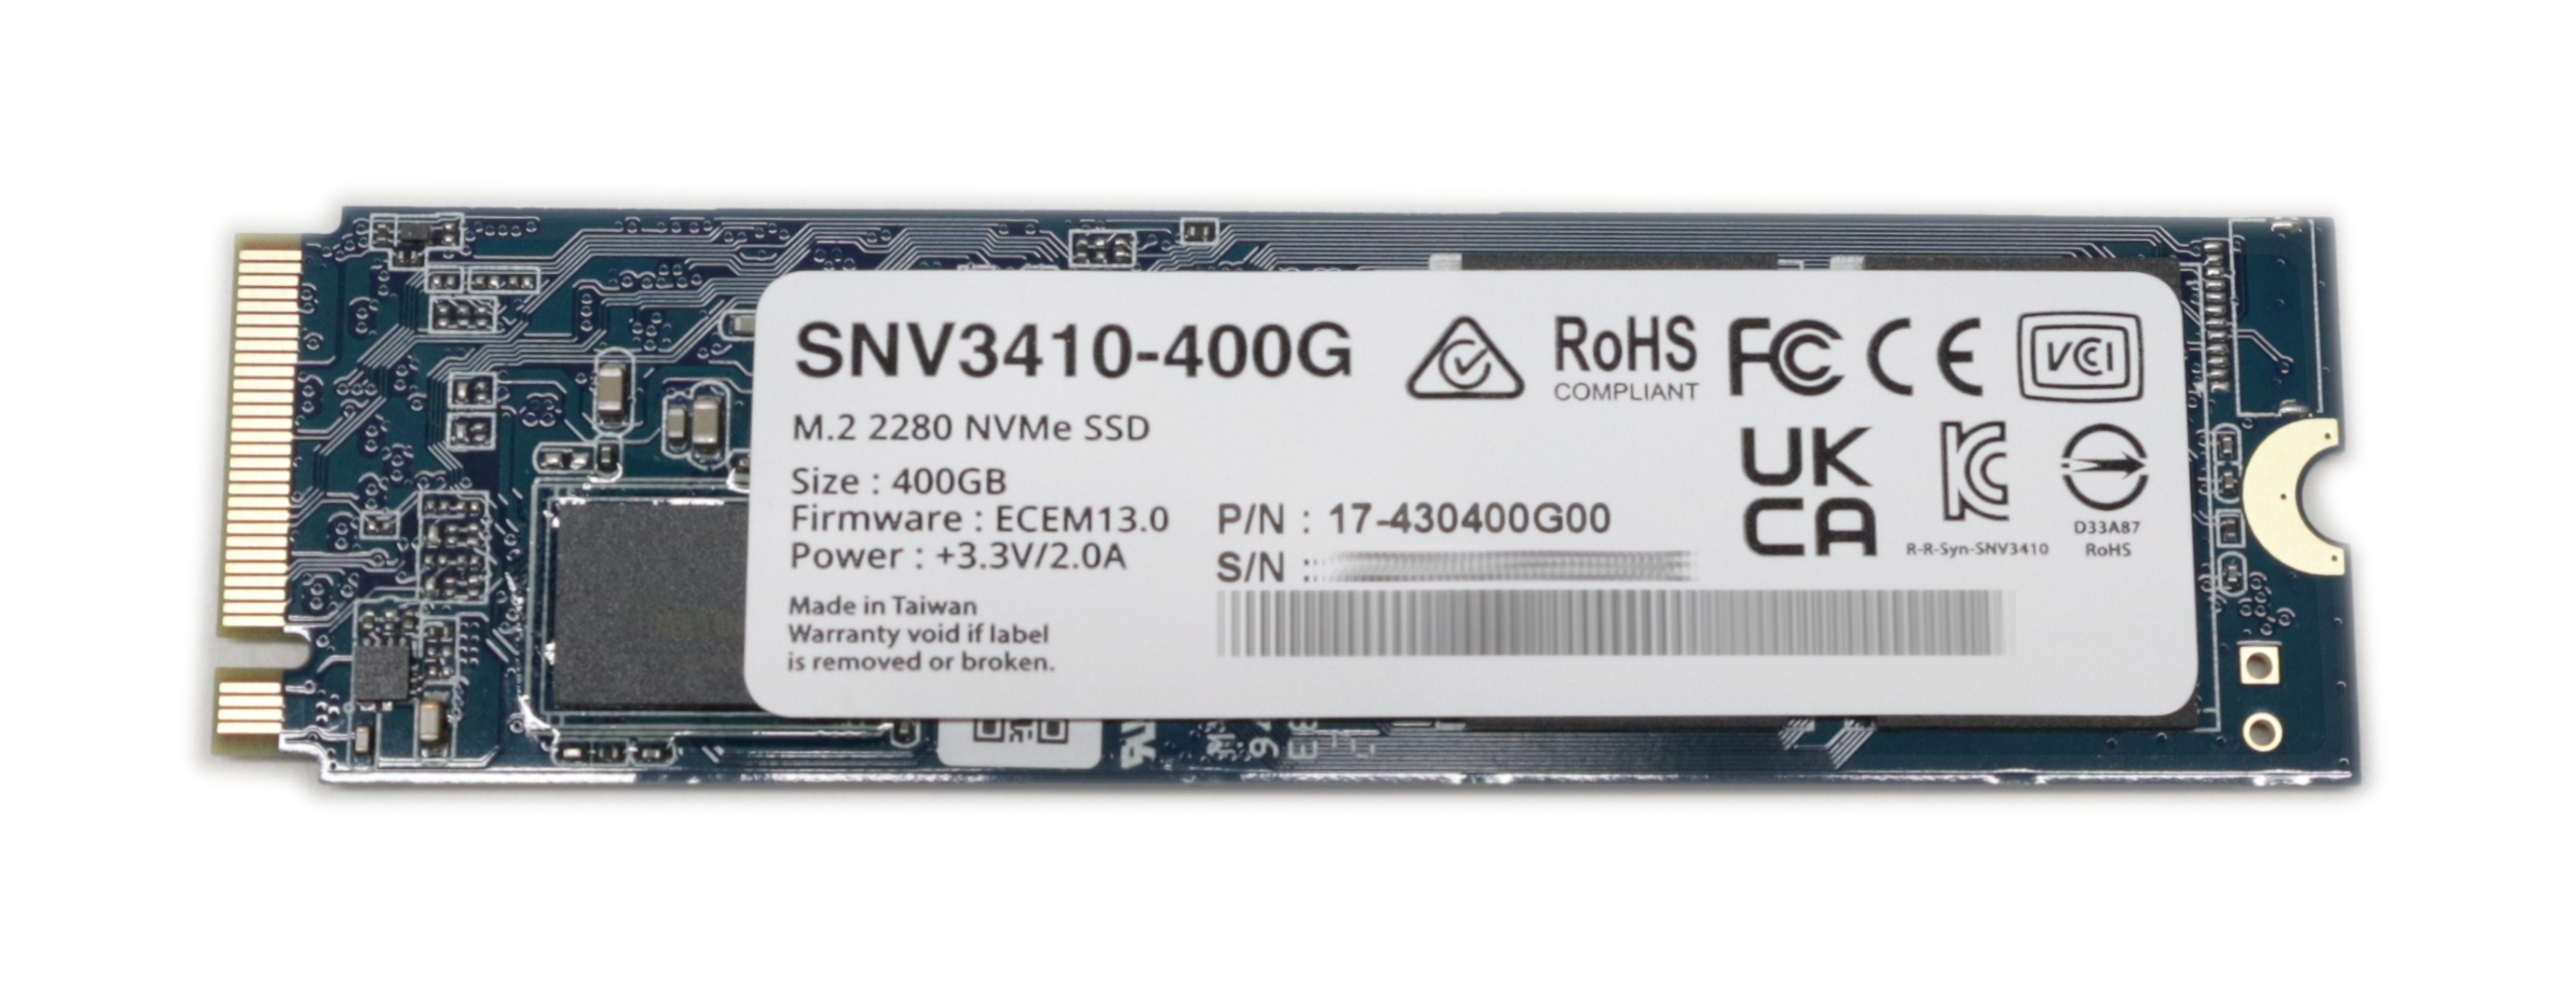 Synology SNV3410 400GB SSD M.2 2280 PCIe 3.0 x4 NVMe 17-430400G00 SNV3410-400G - Click Image to Close